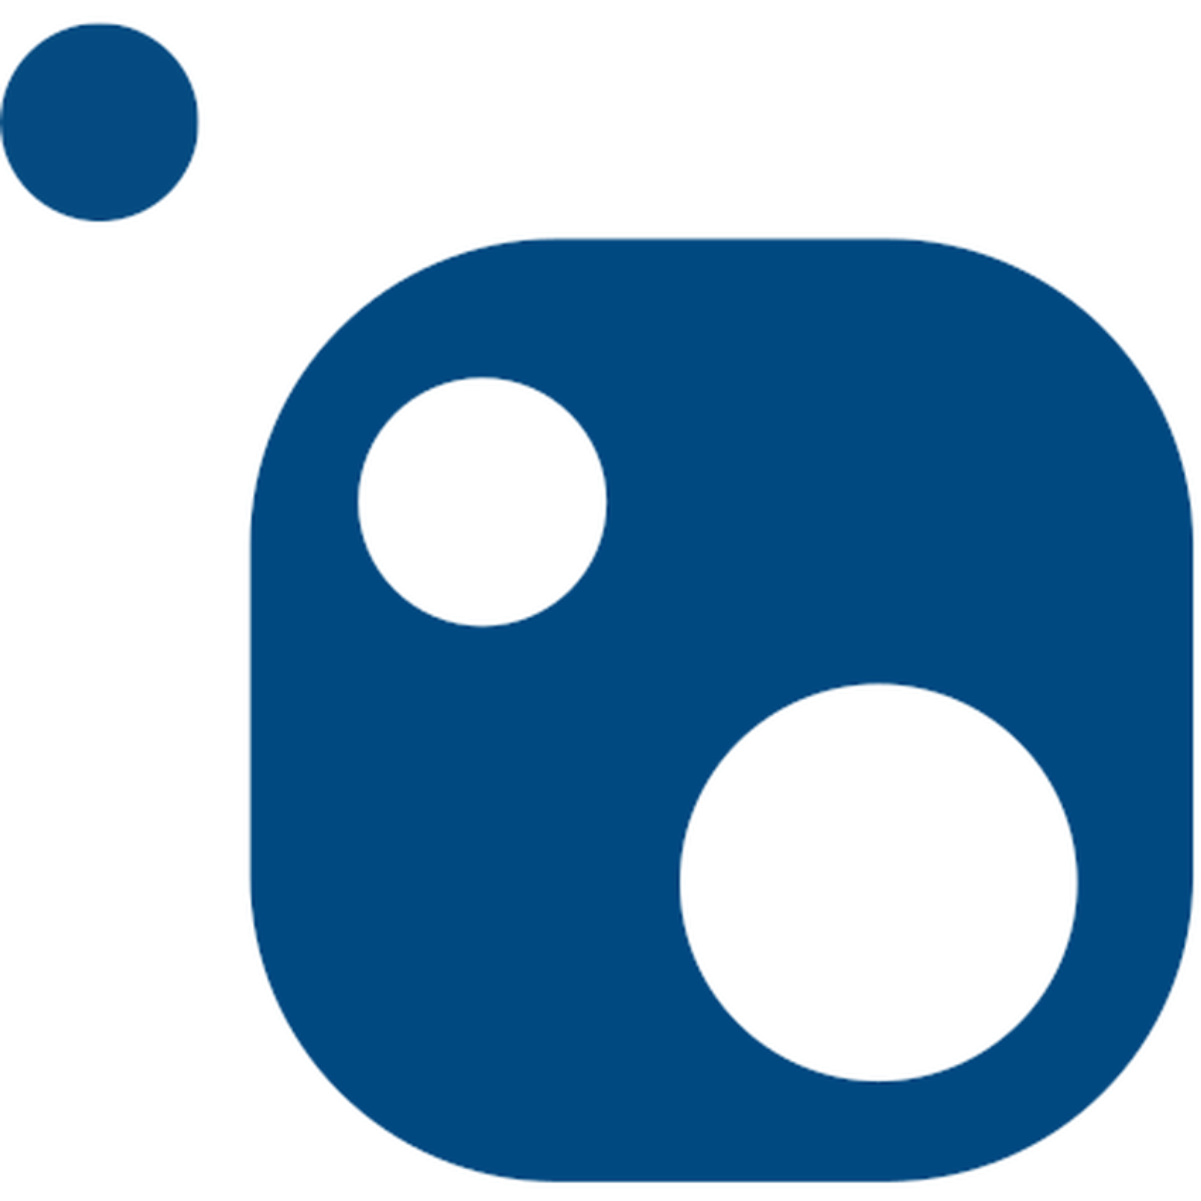 Nuget logo